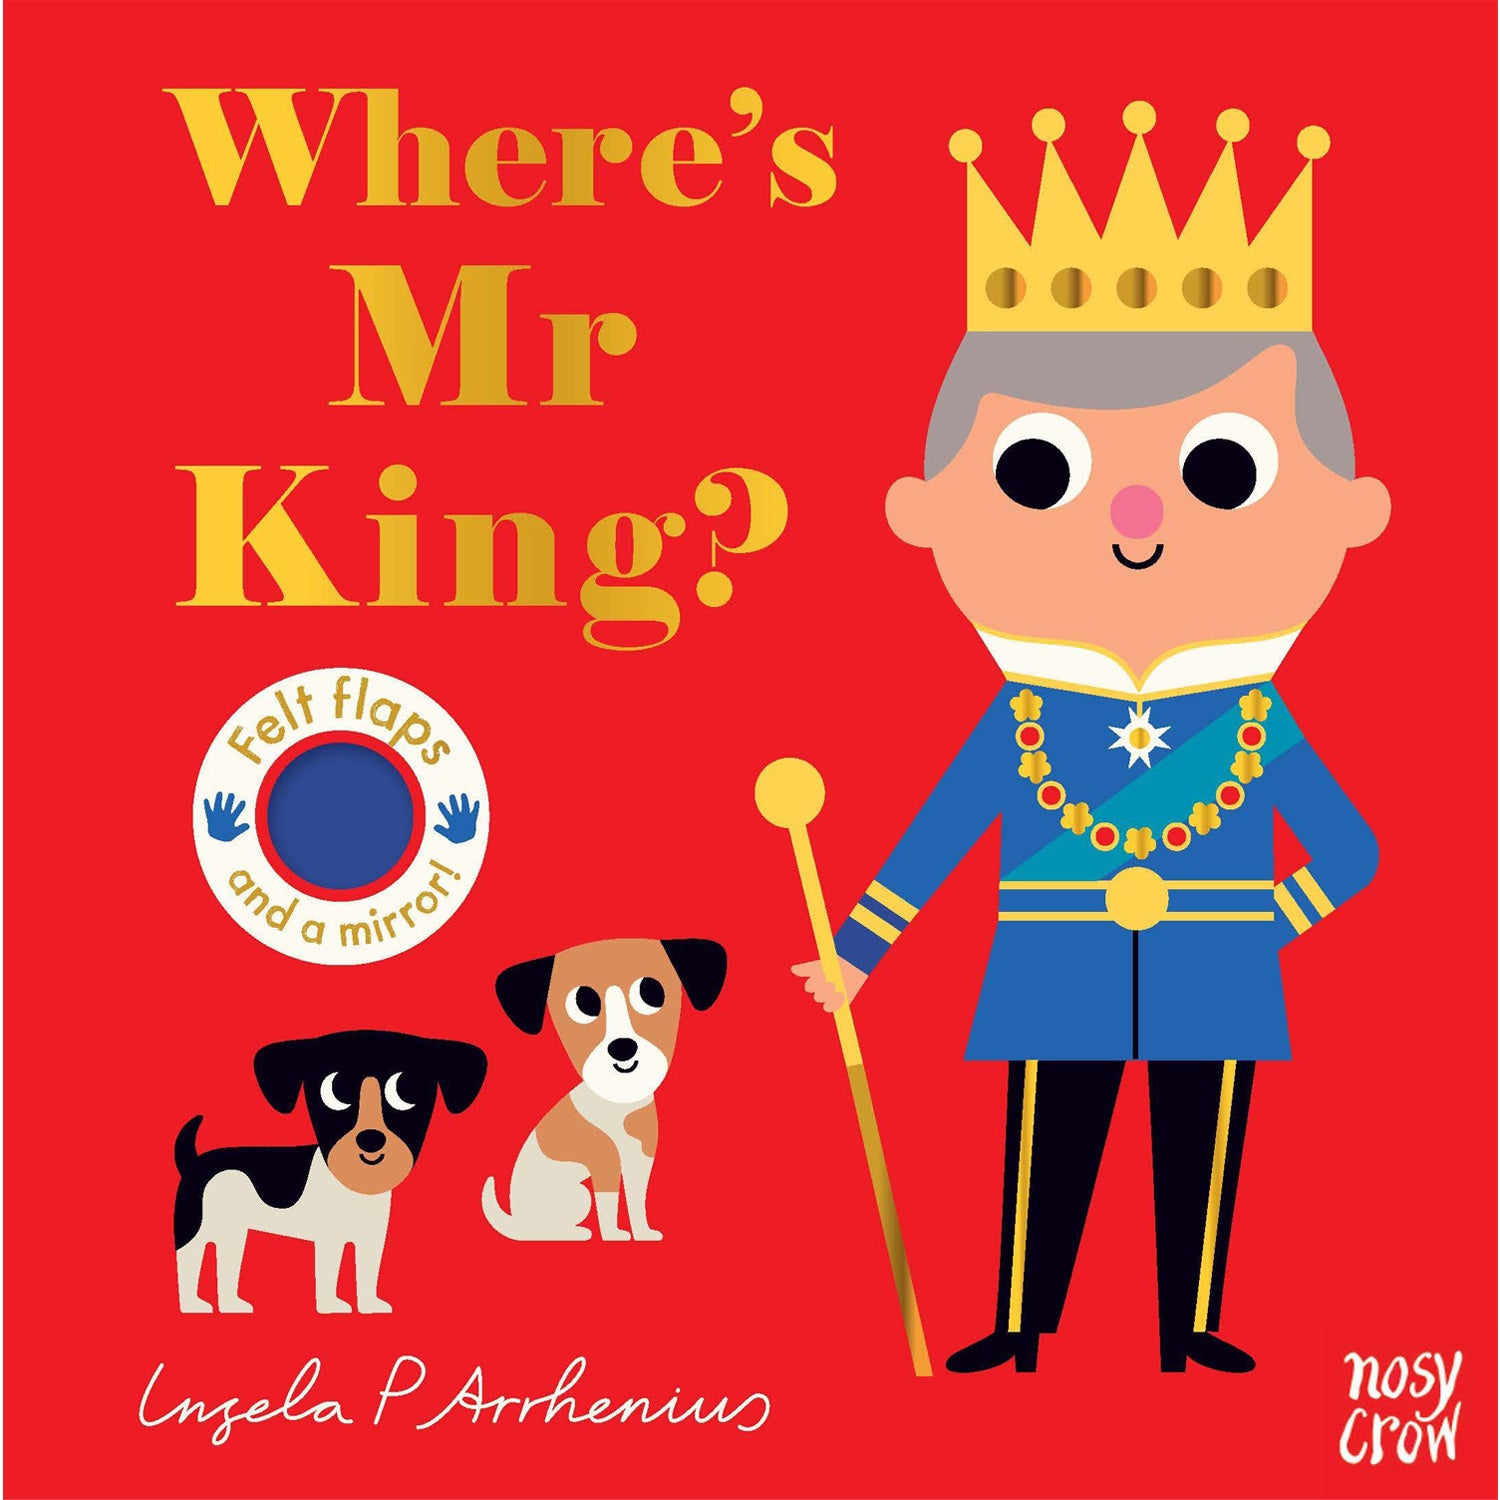 Where's Mr King - Felt Flap Book